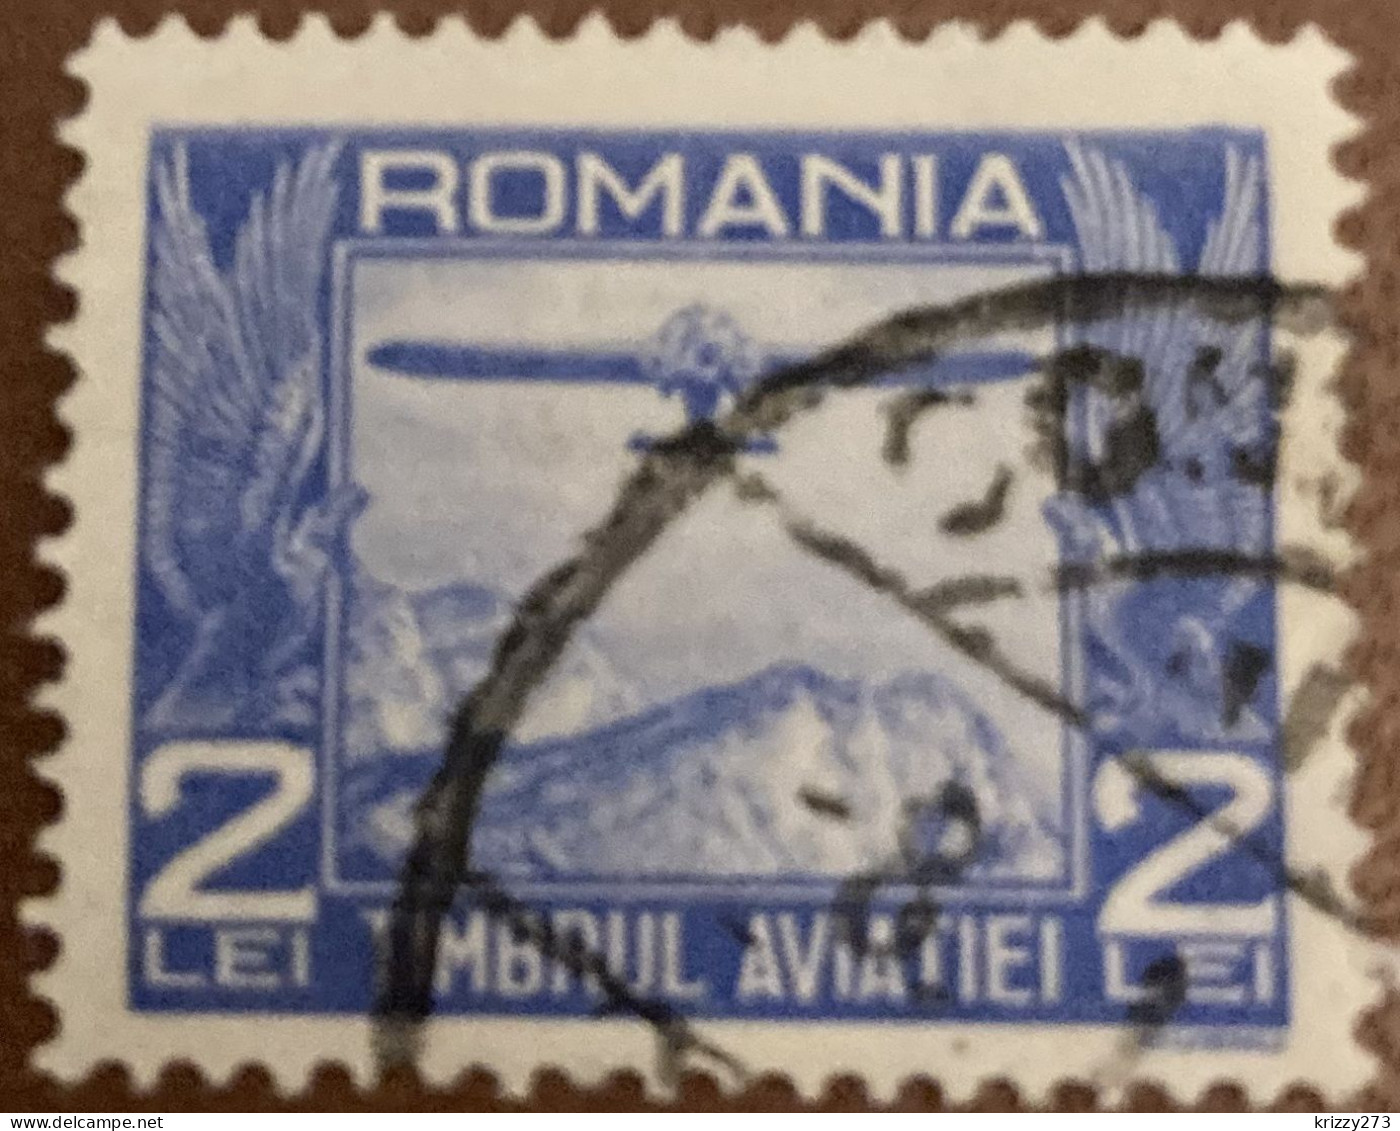 Romania 1931 National Fund Aviation 2L - Used - Steuermarken